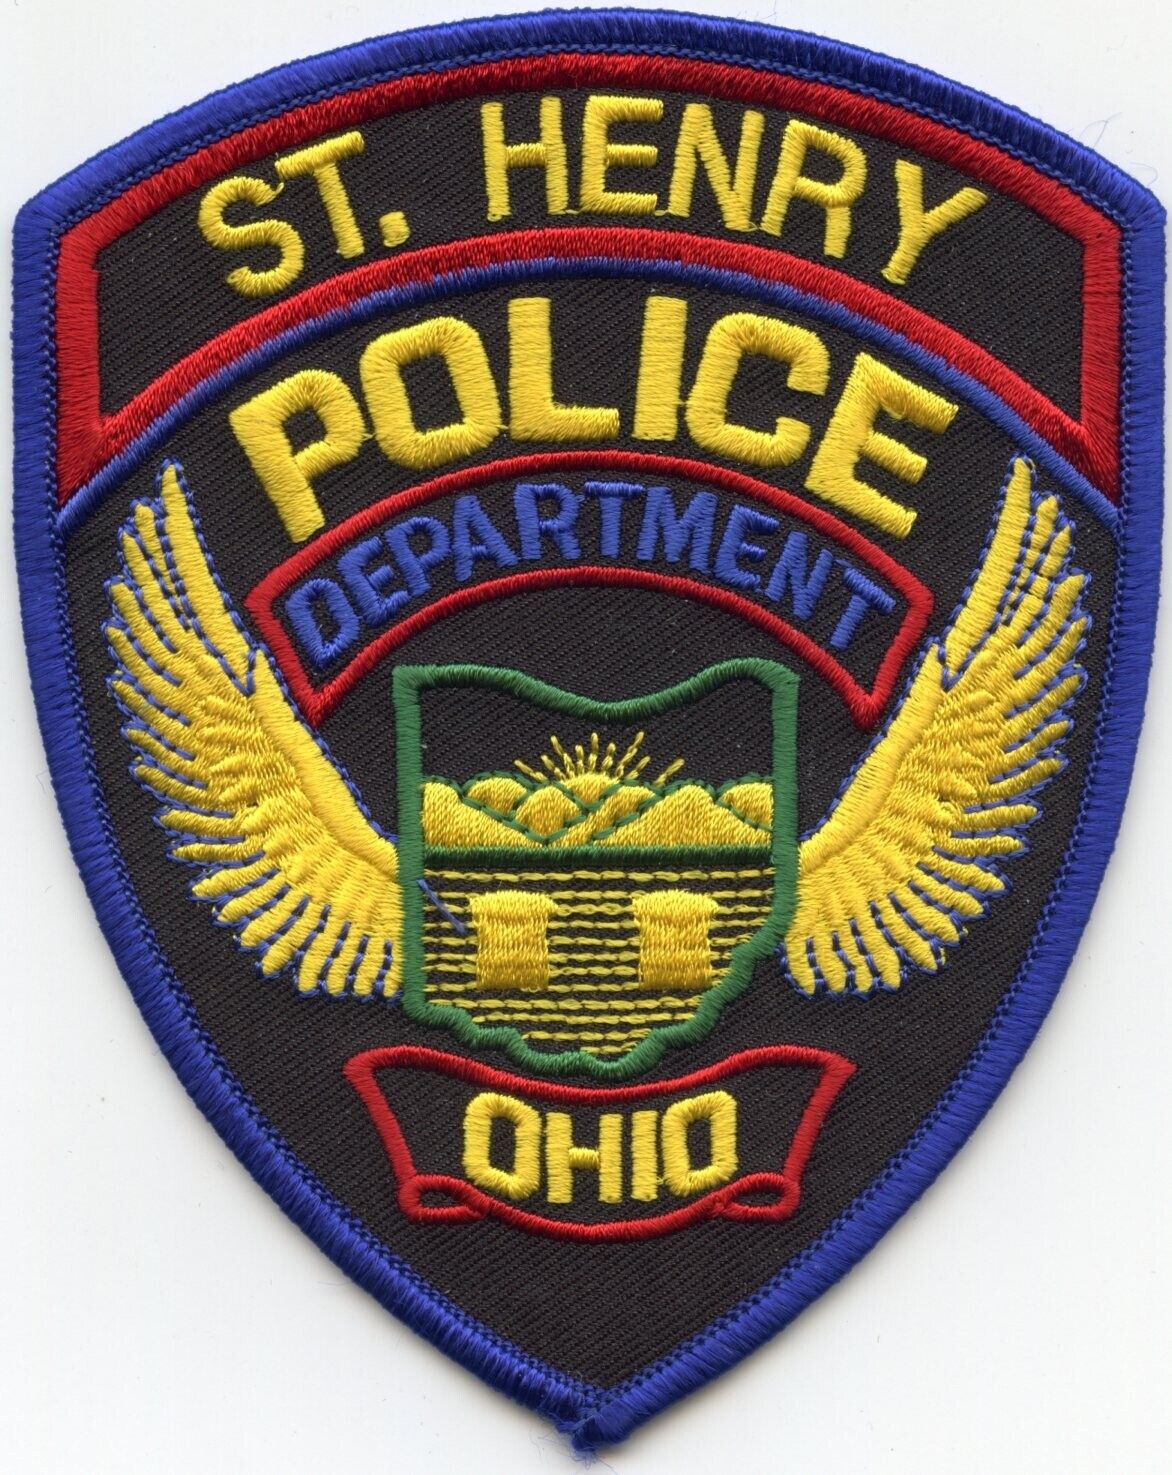 SAINT ST HENRY OHIO POLICE PATCH